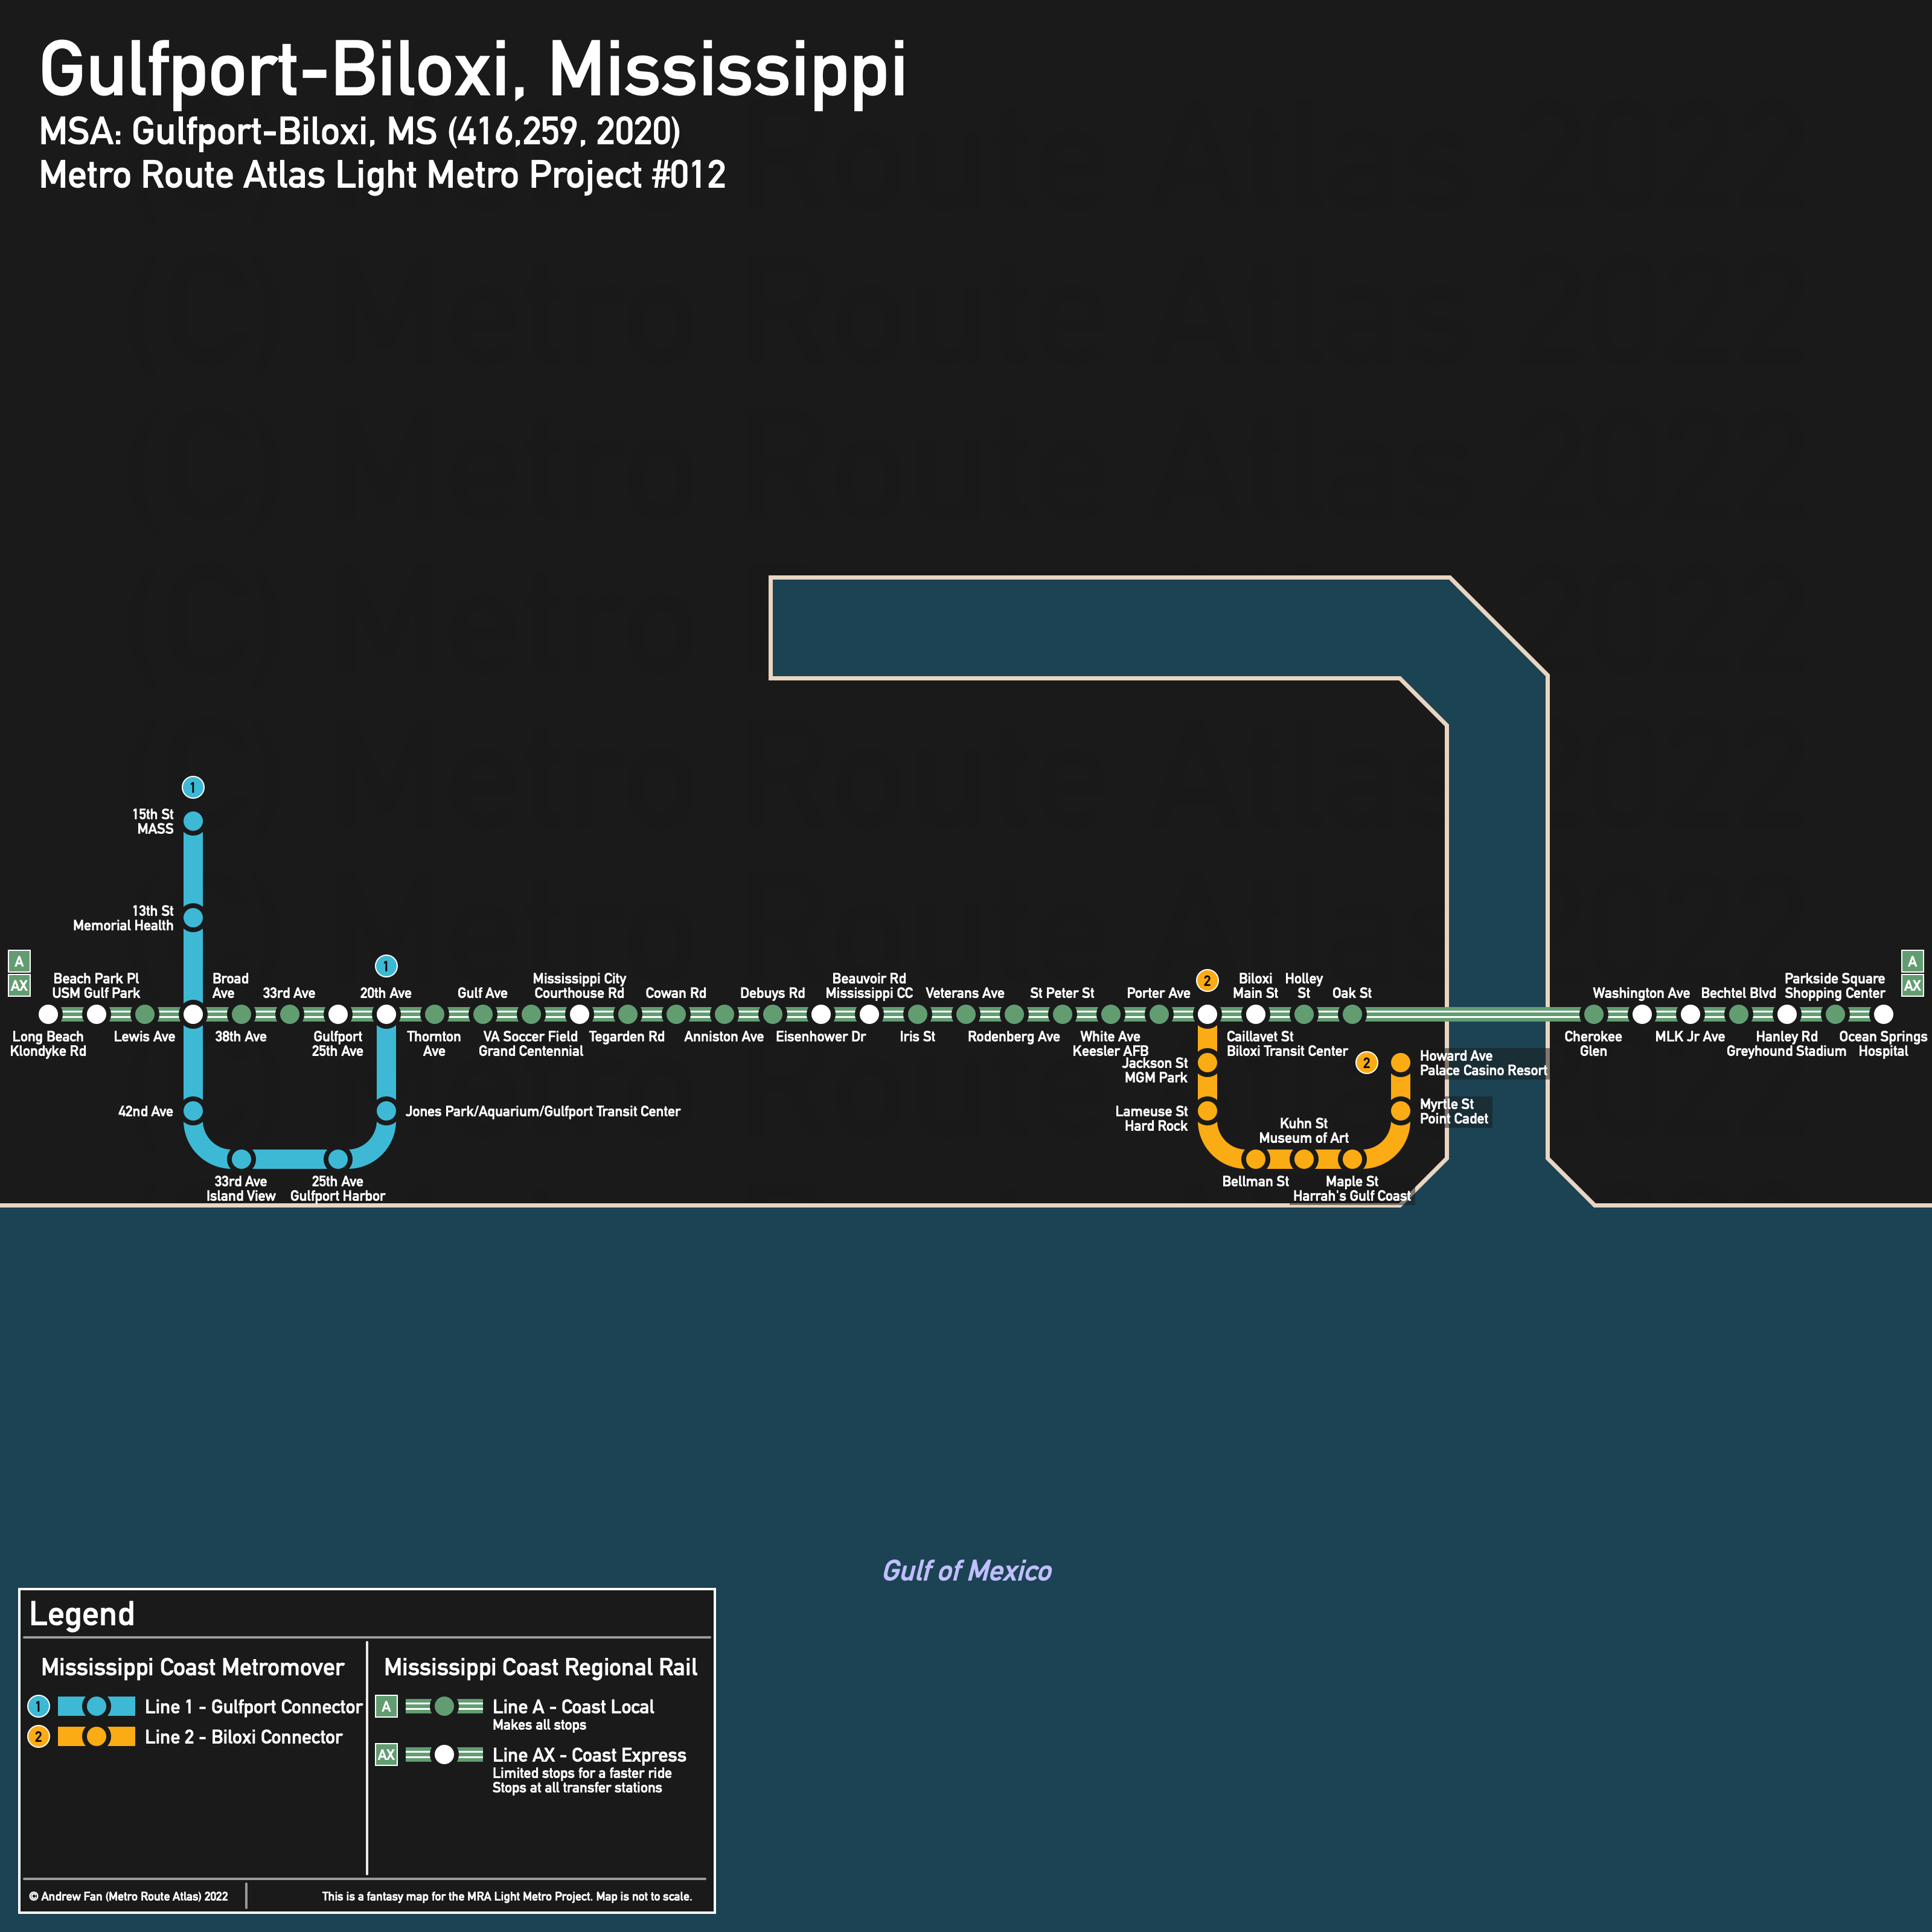 Gulfport-Biloxi, MS (diagrammatic)